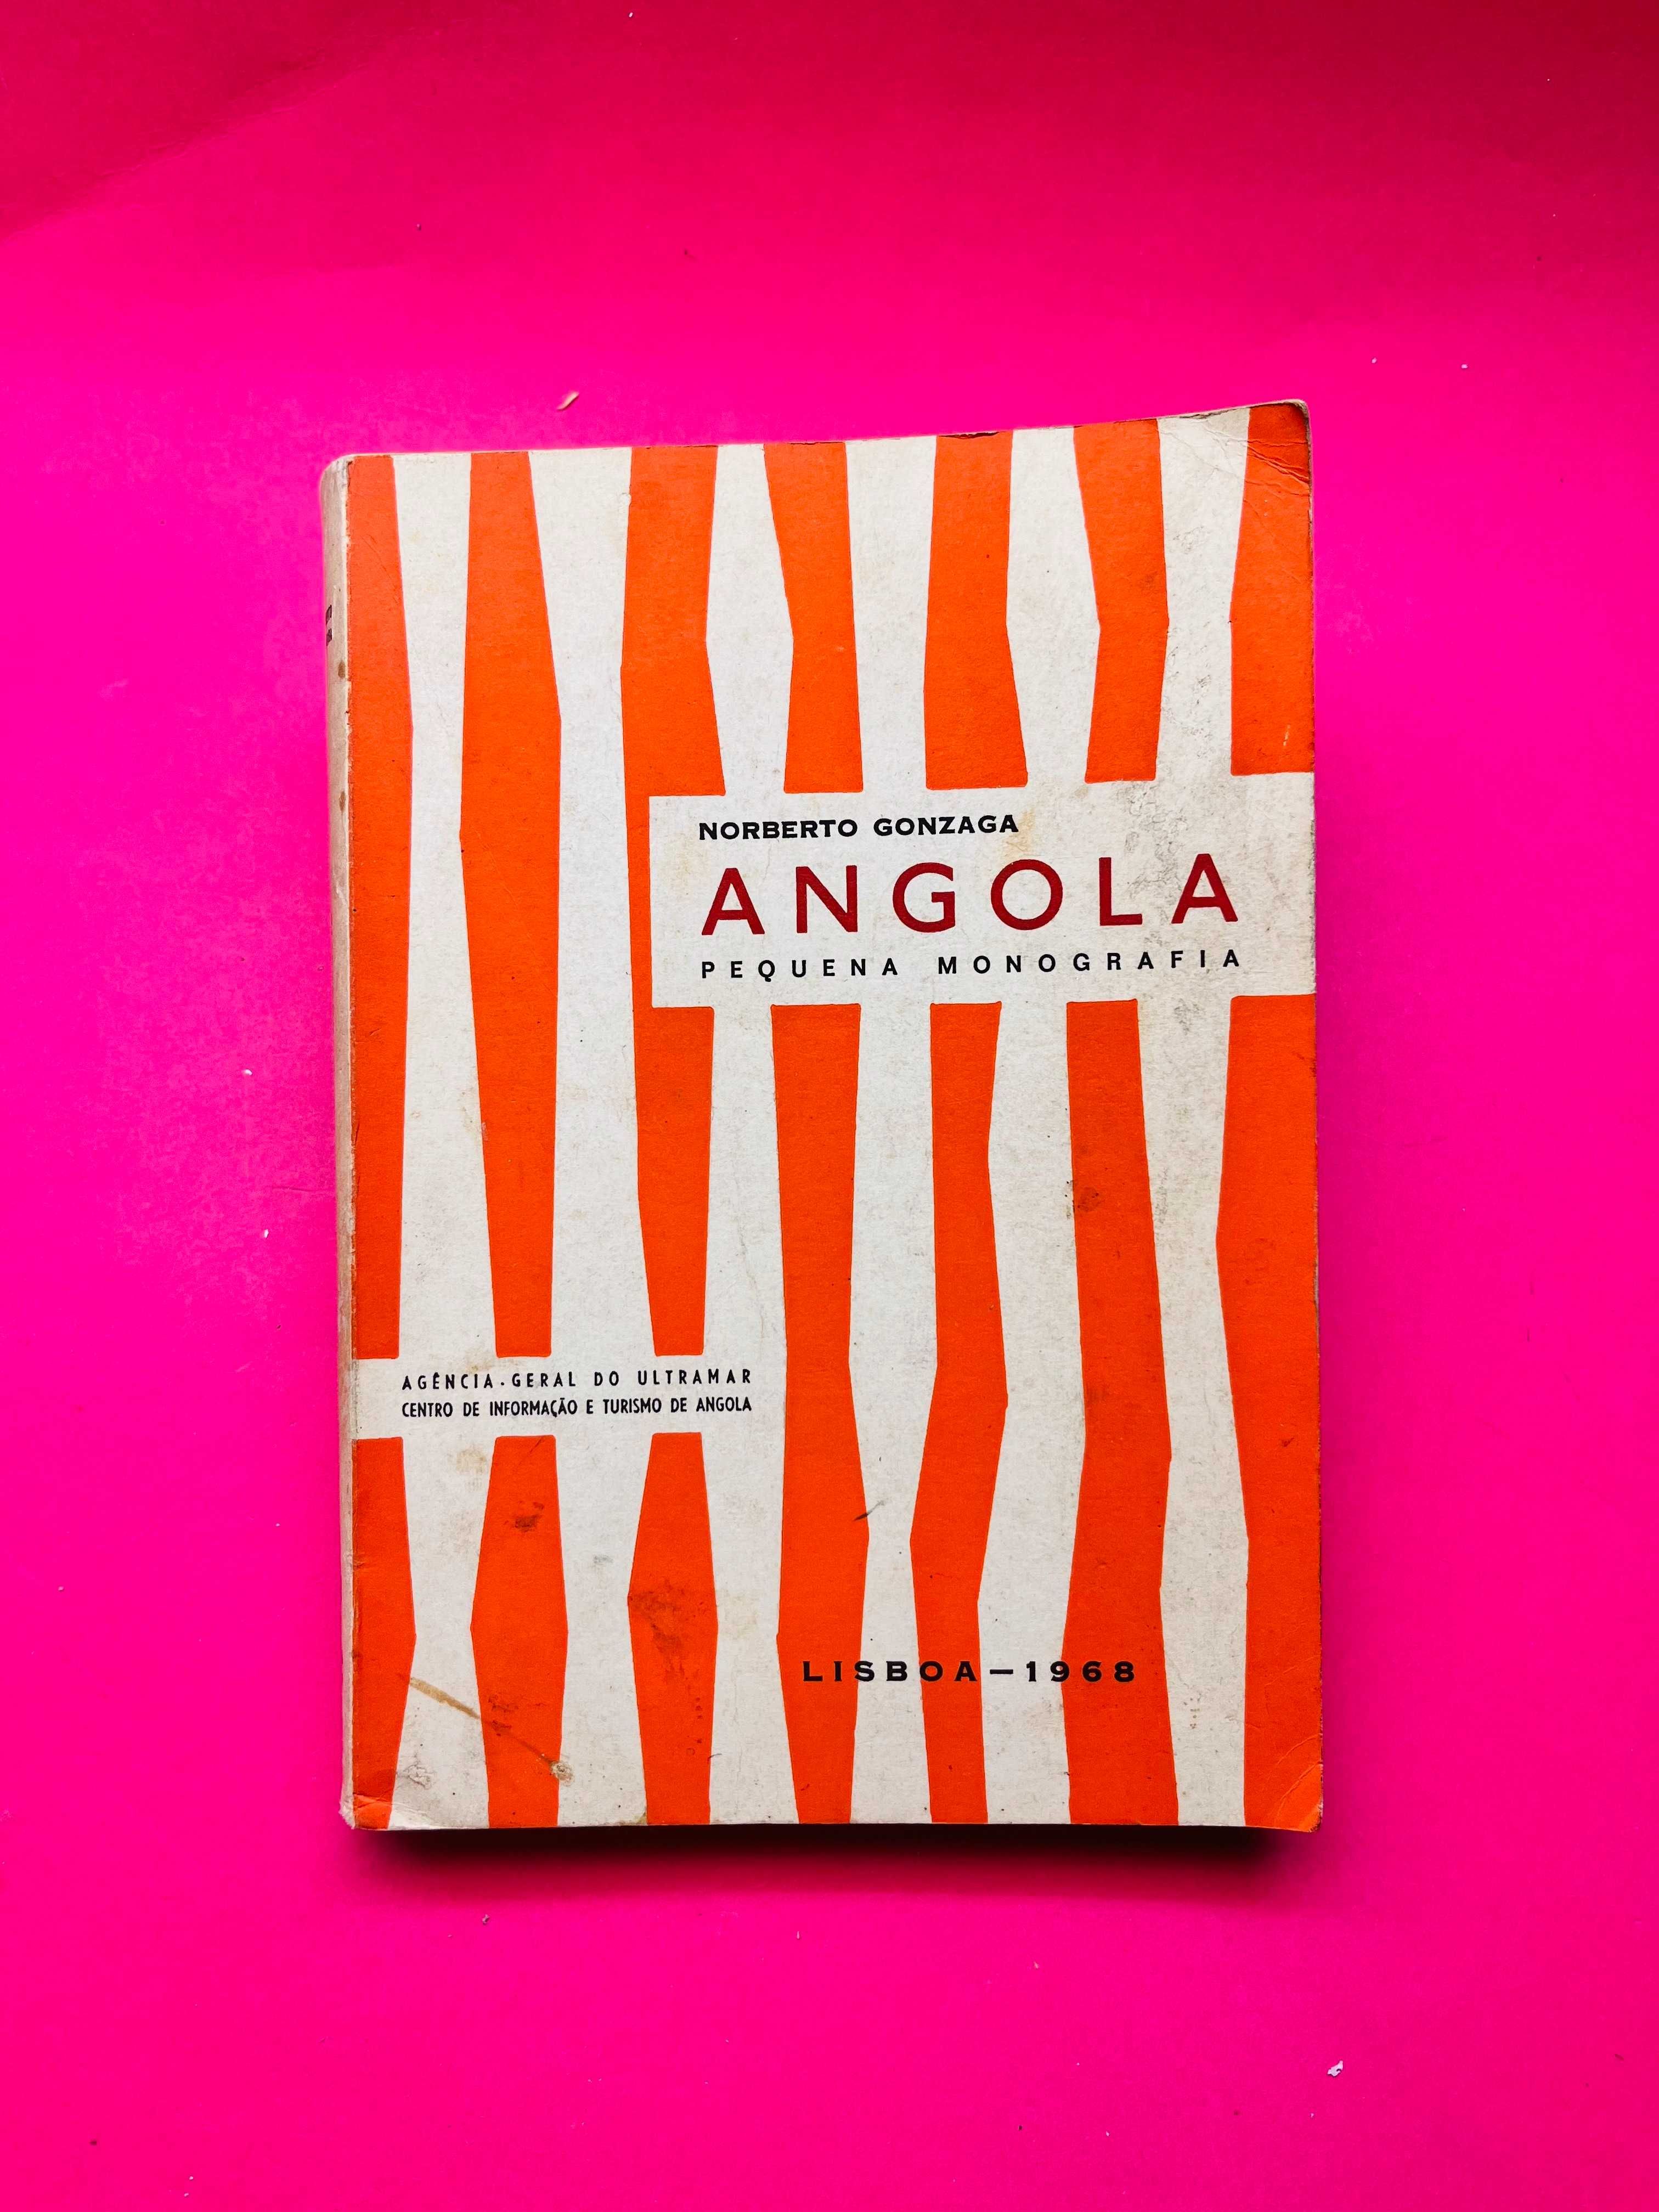 Angola: Pequena Monografia - Norberto Gonzaga